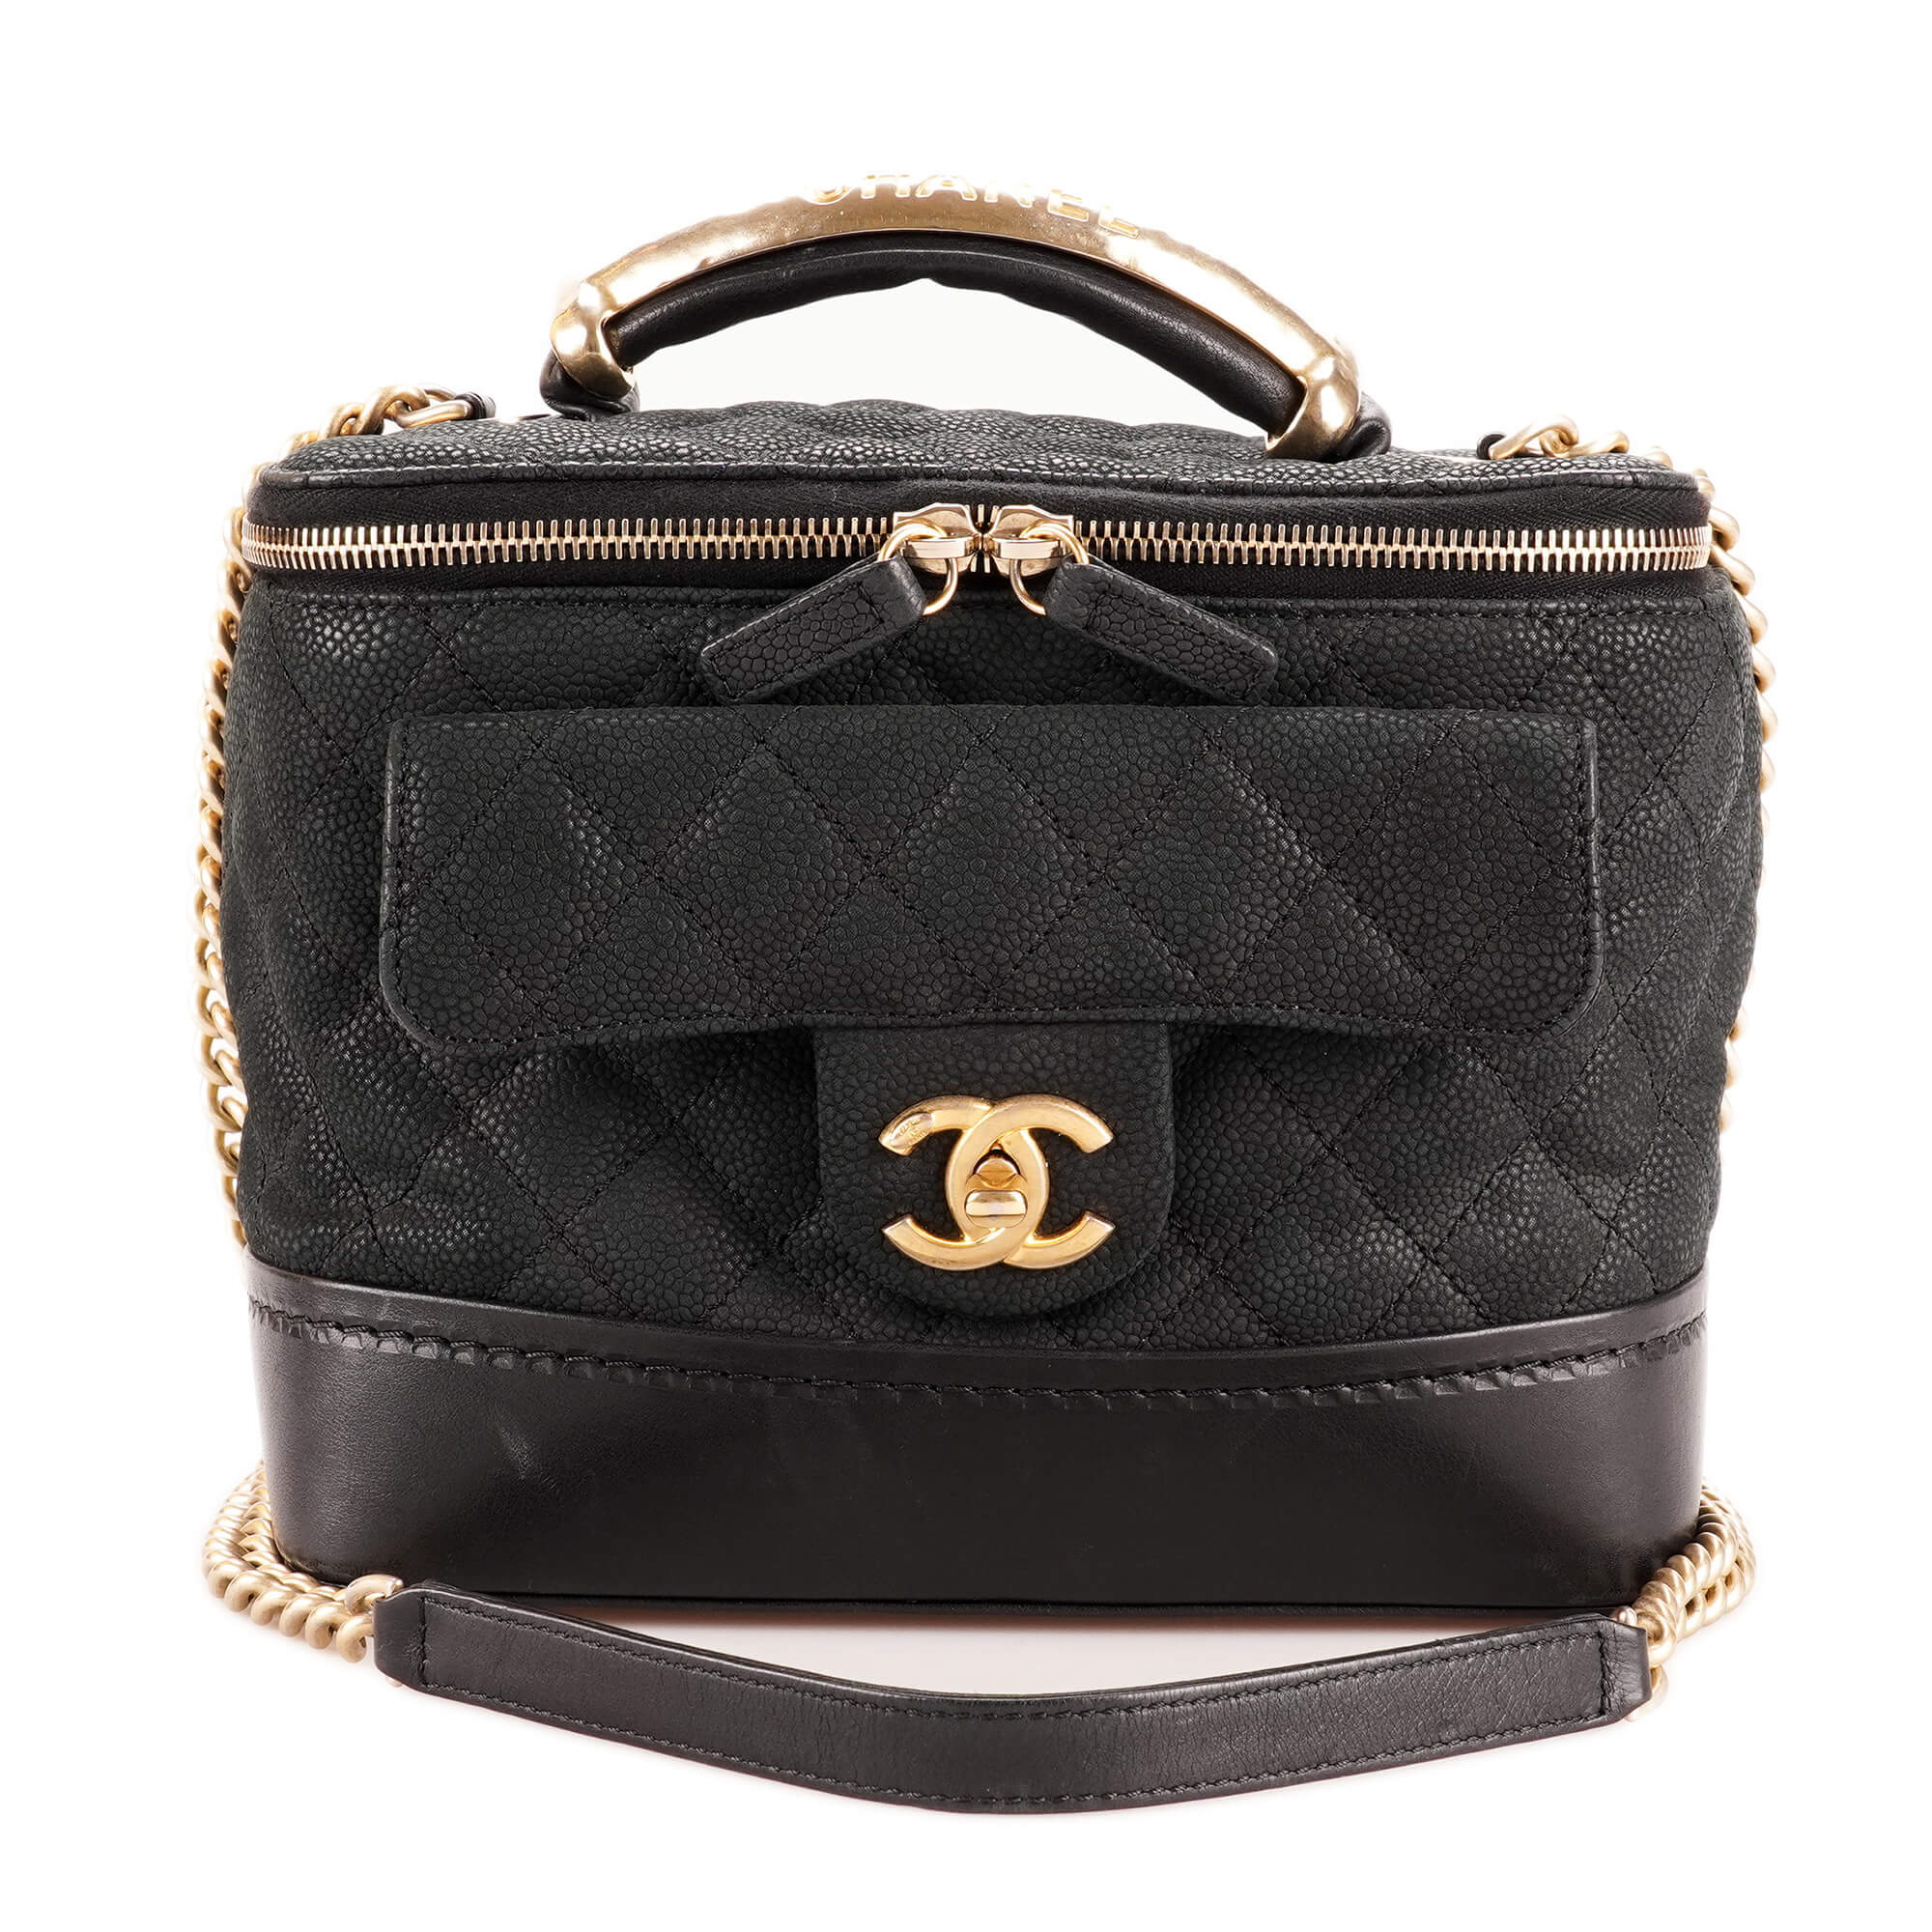 Chanel - Black Caviar Leather CC Logo Vanity Case Bag 